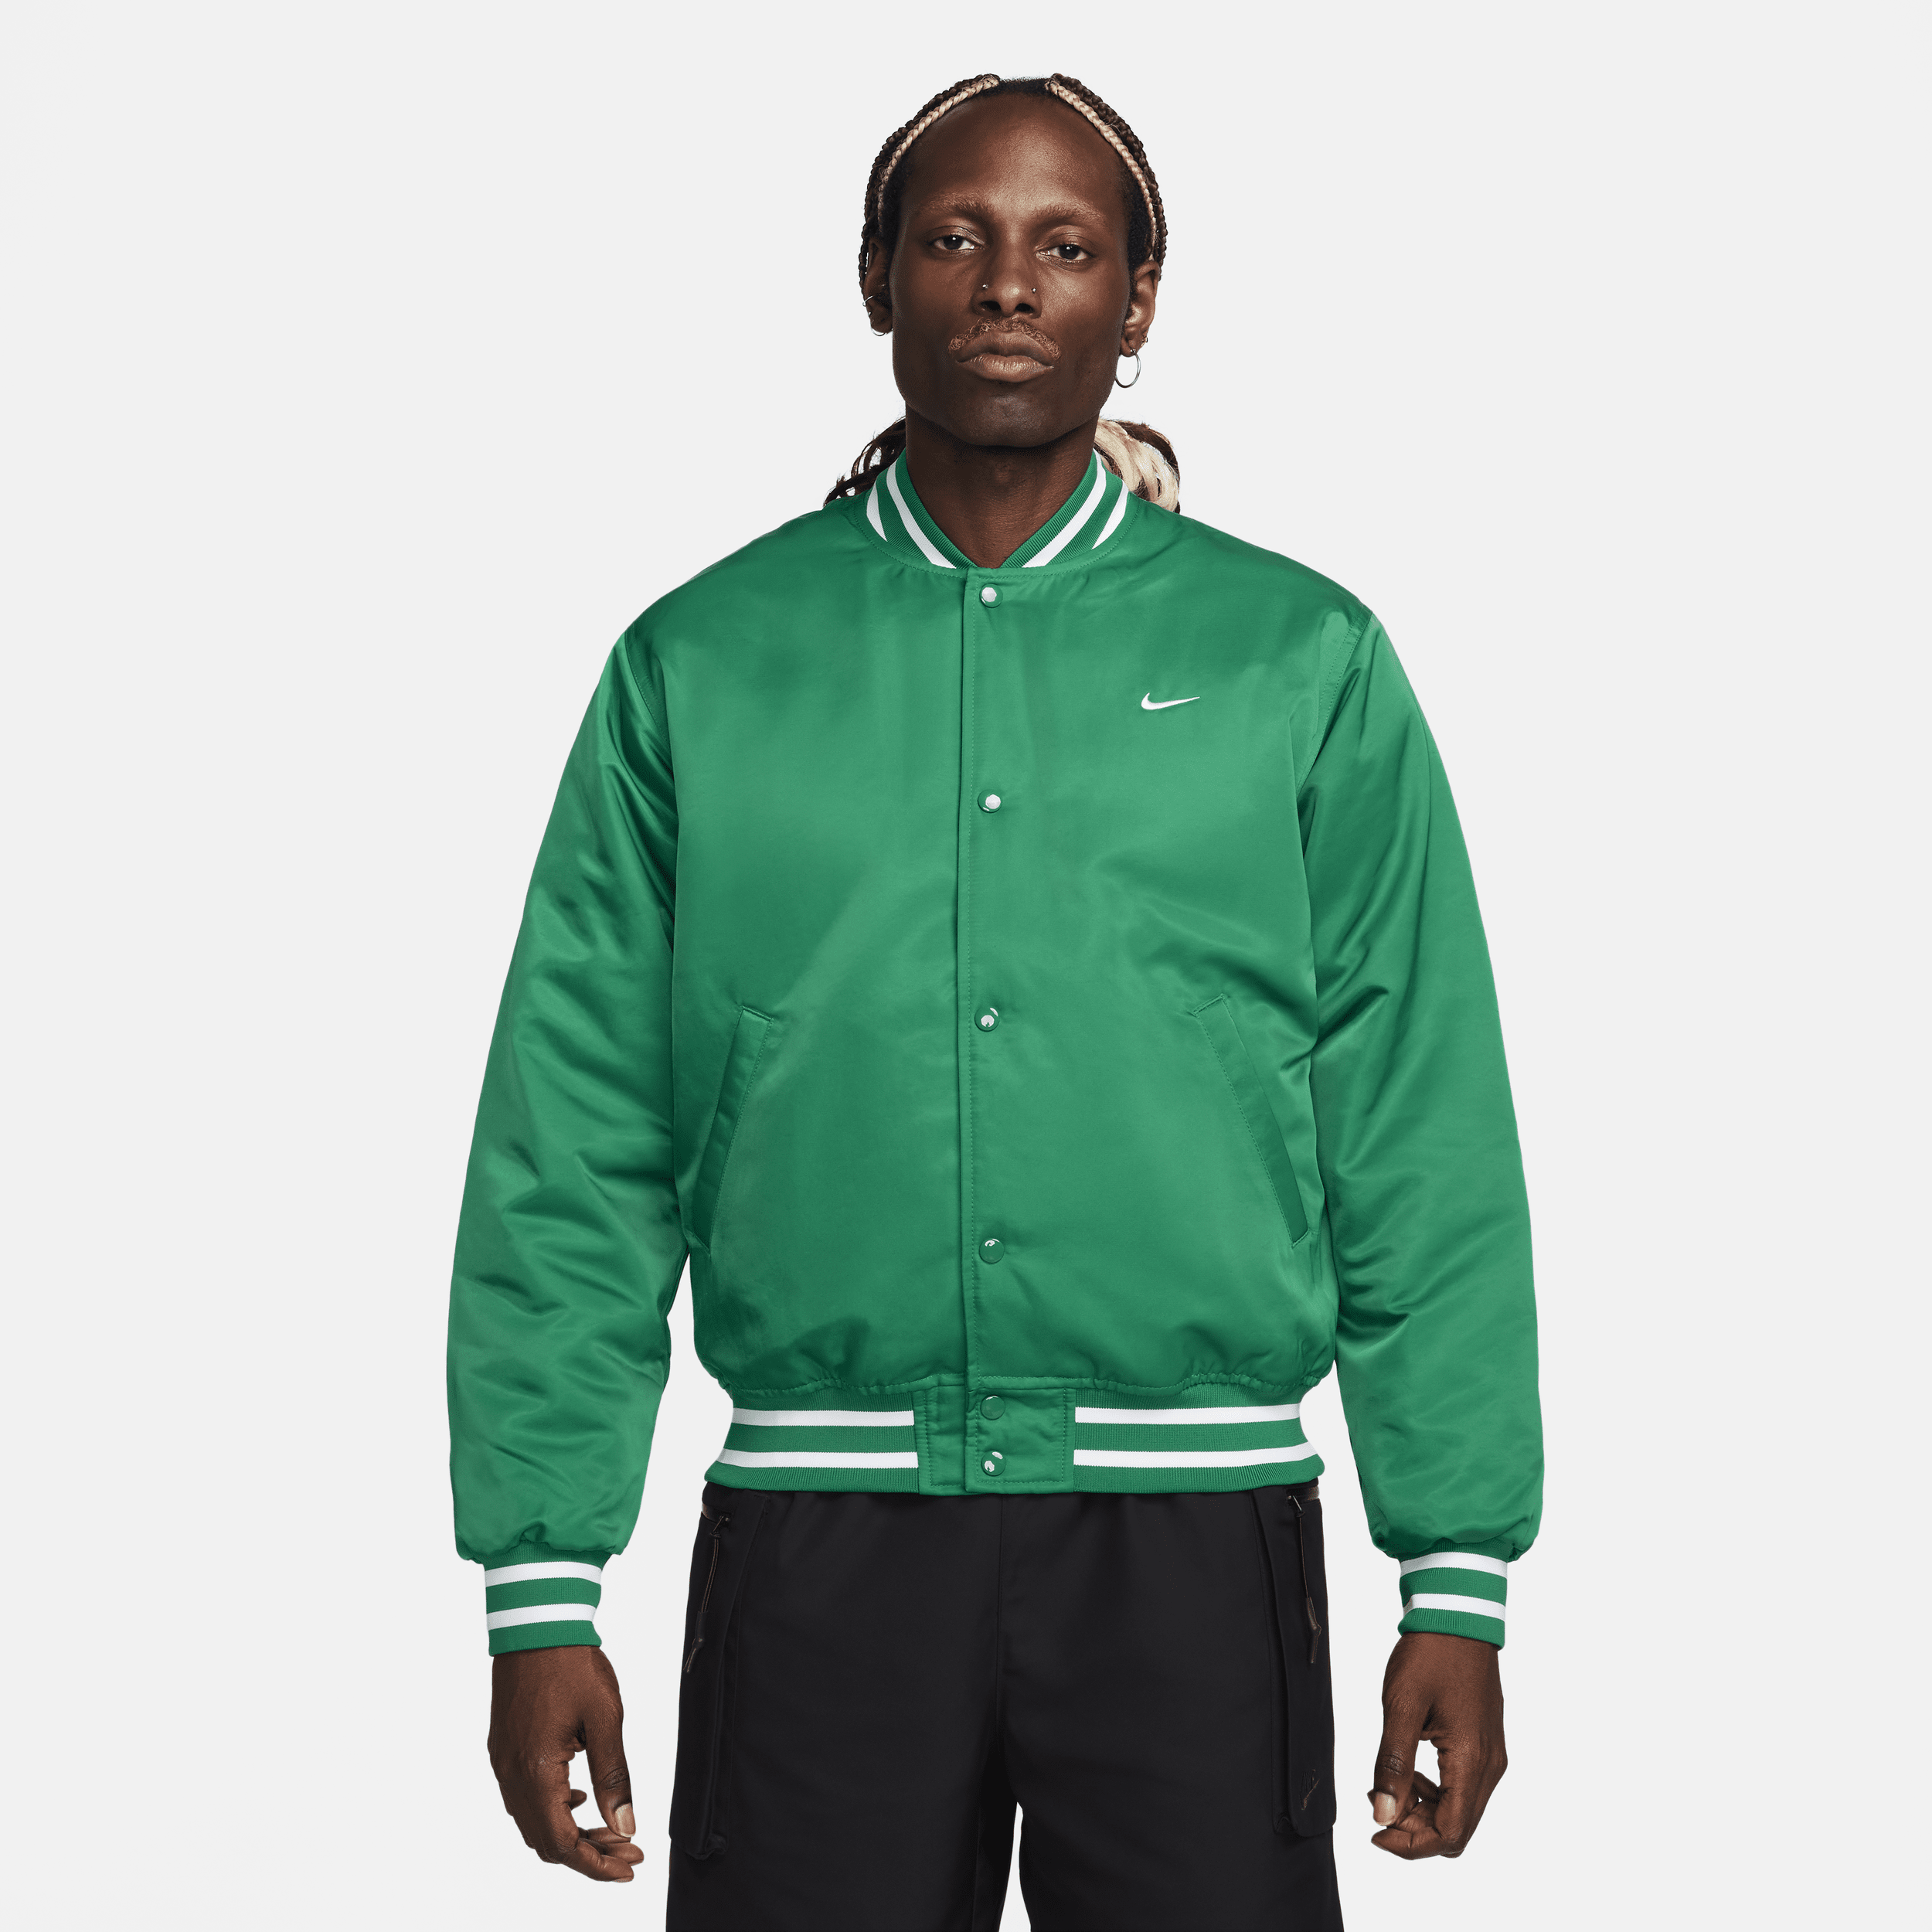 Giacca Dugout Nike Authentics – Uomo - Verde